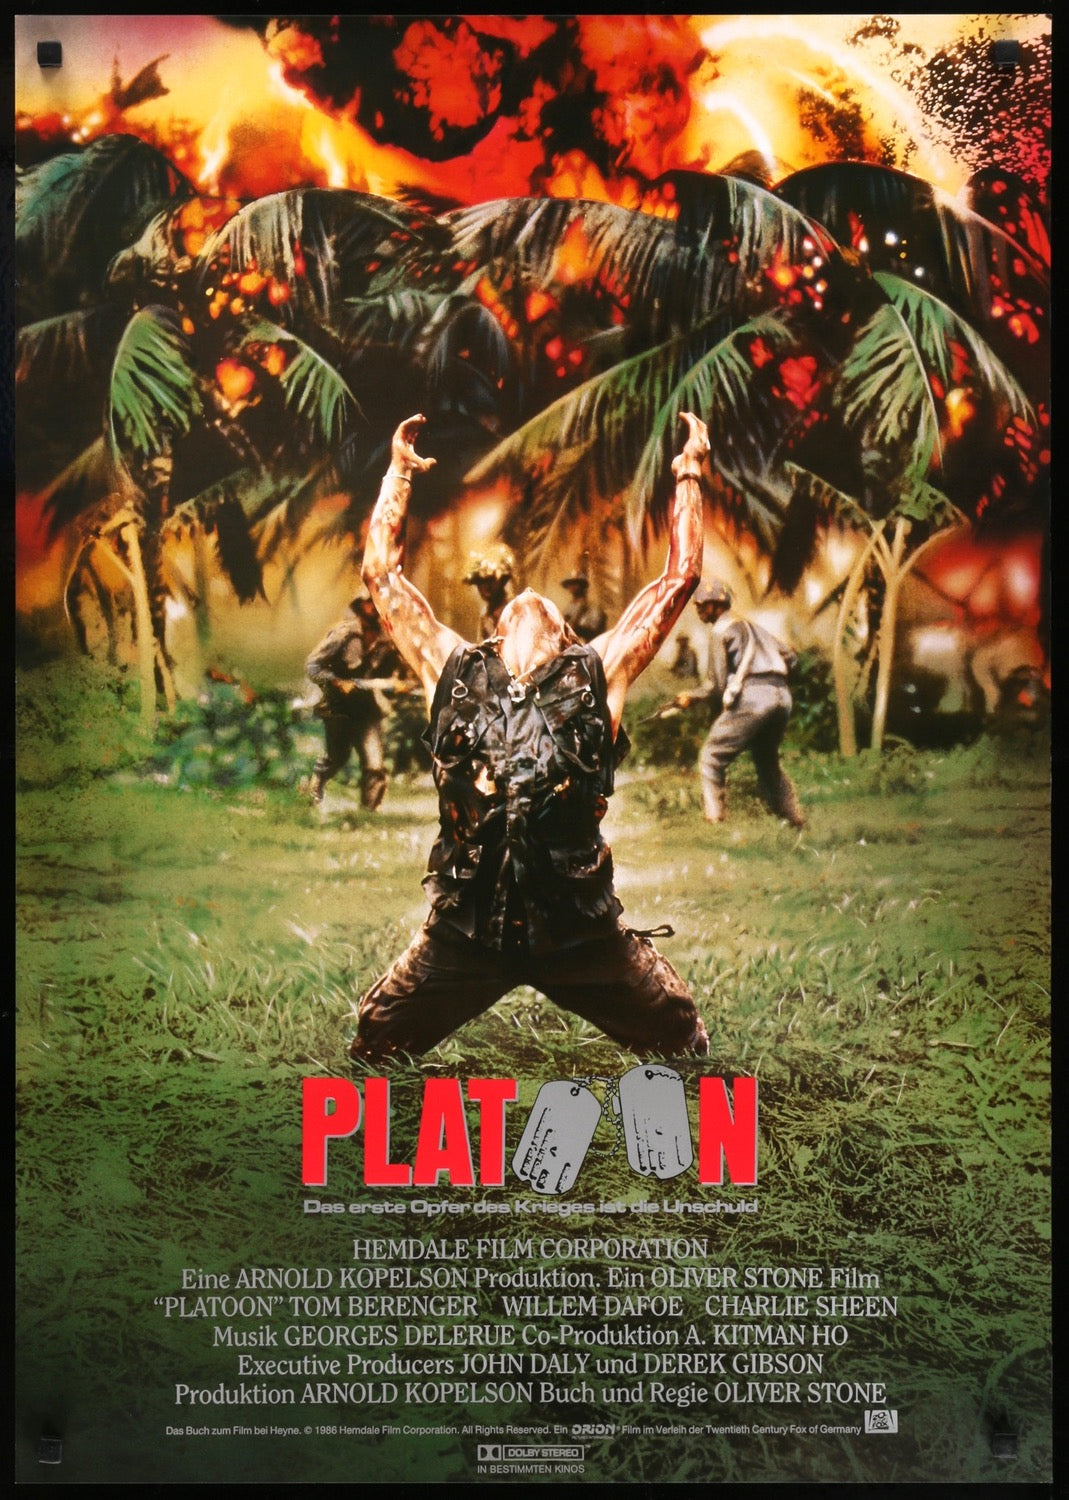 Platoon (1986) original movie poster for sale at Original Film Art